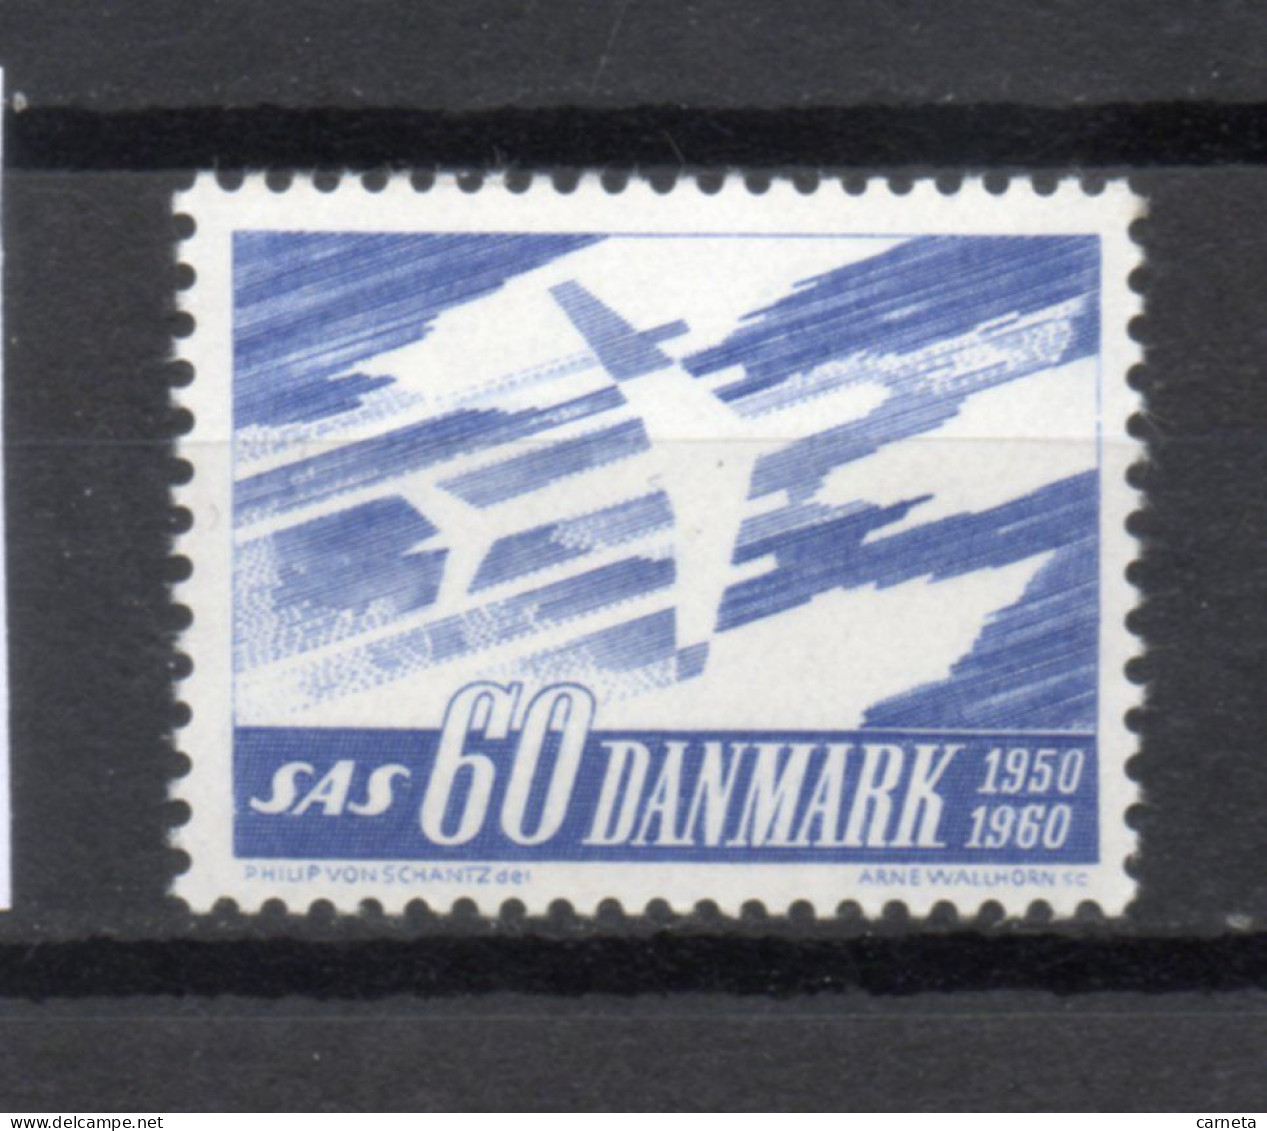 DANEMARK   N° 396a  PAPIER FLUORESCENT   NEUF SANS CHARNIERE  COTE  9.00€    AVION - Unused Stamps